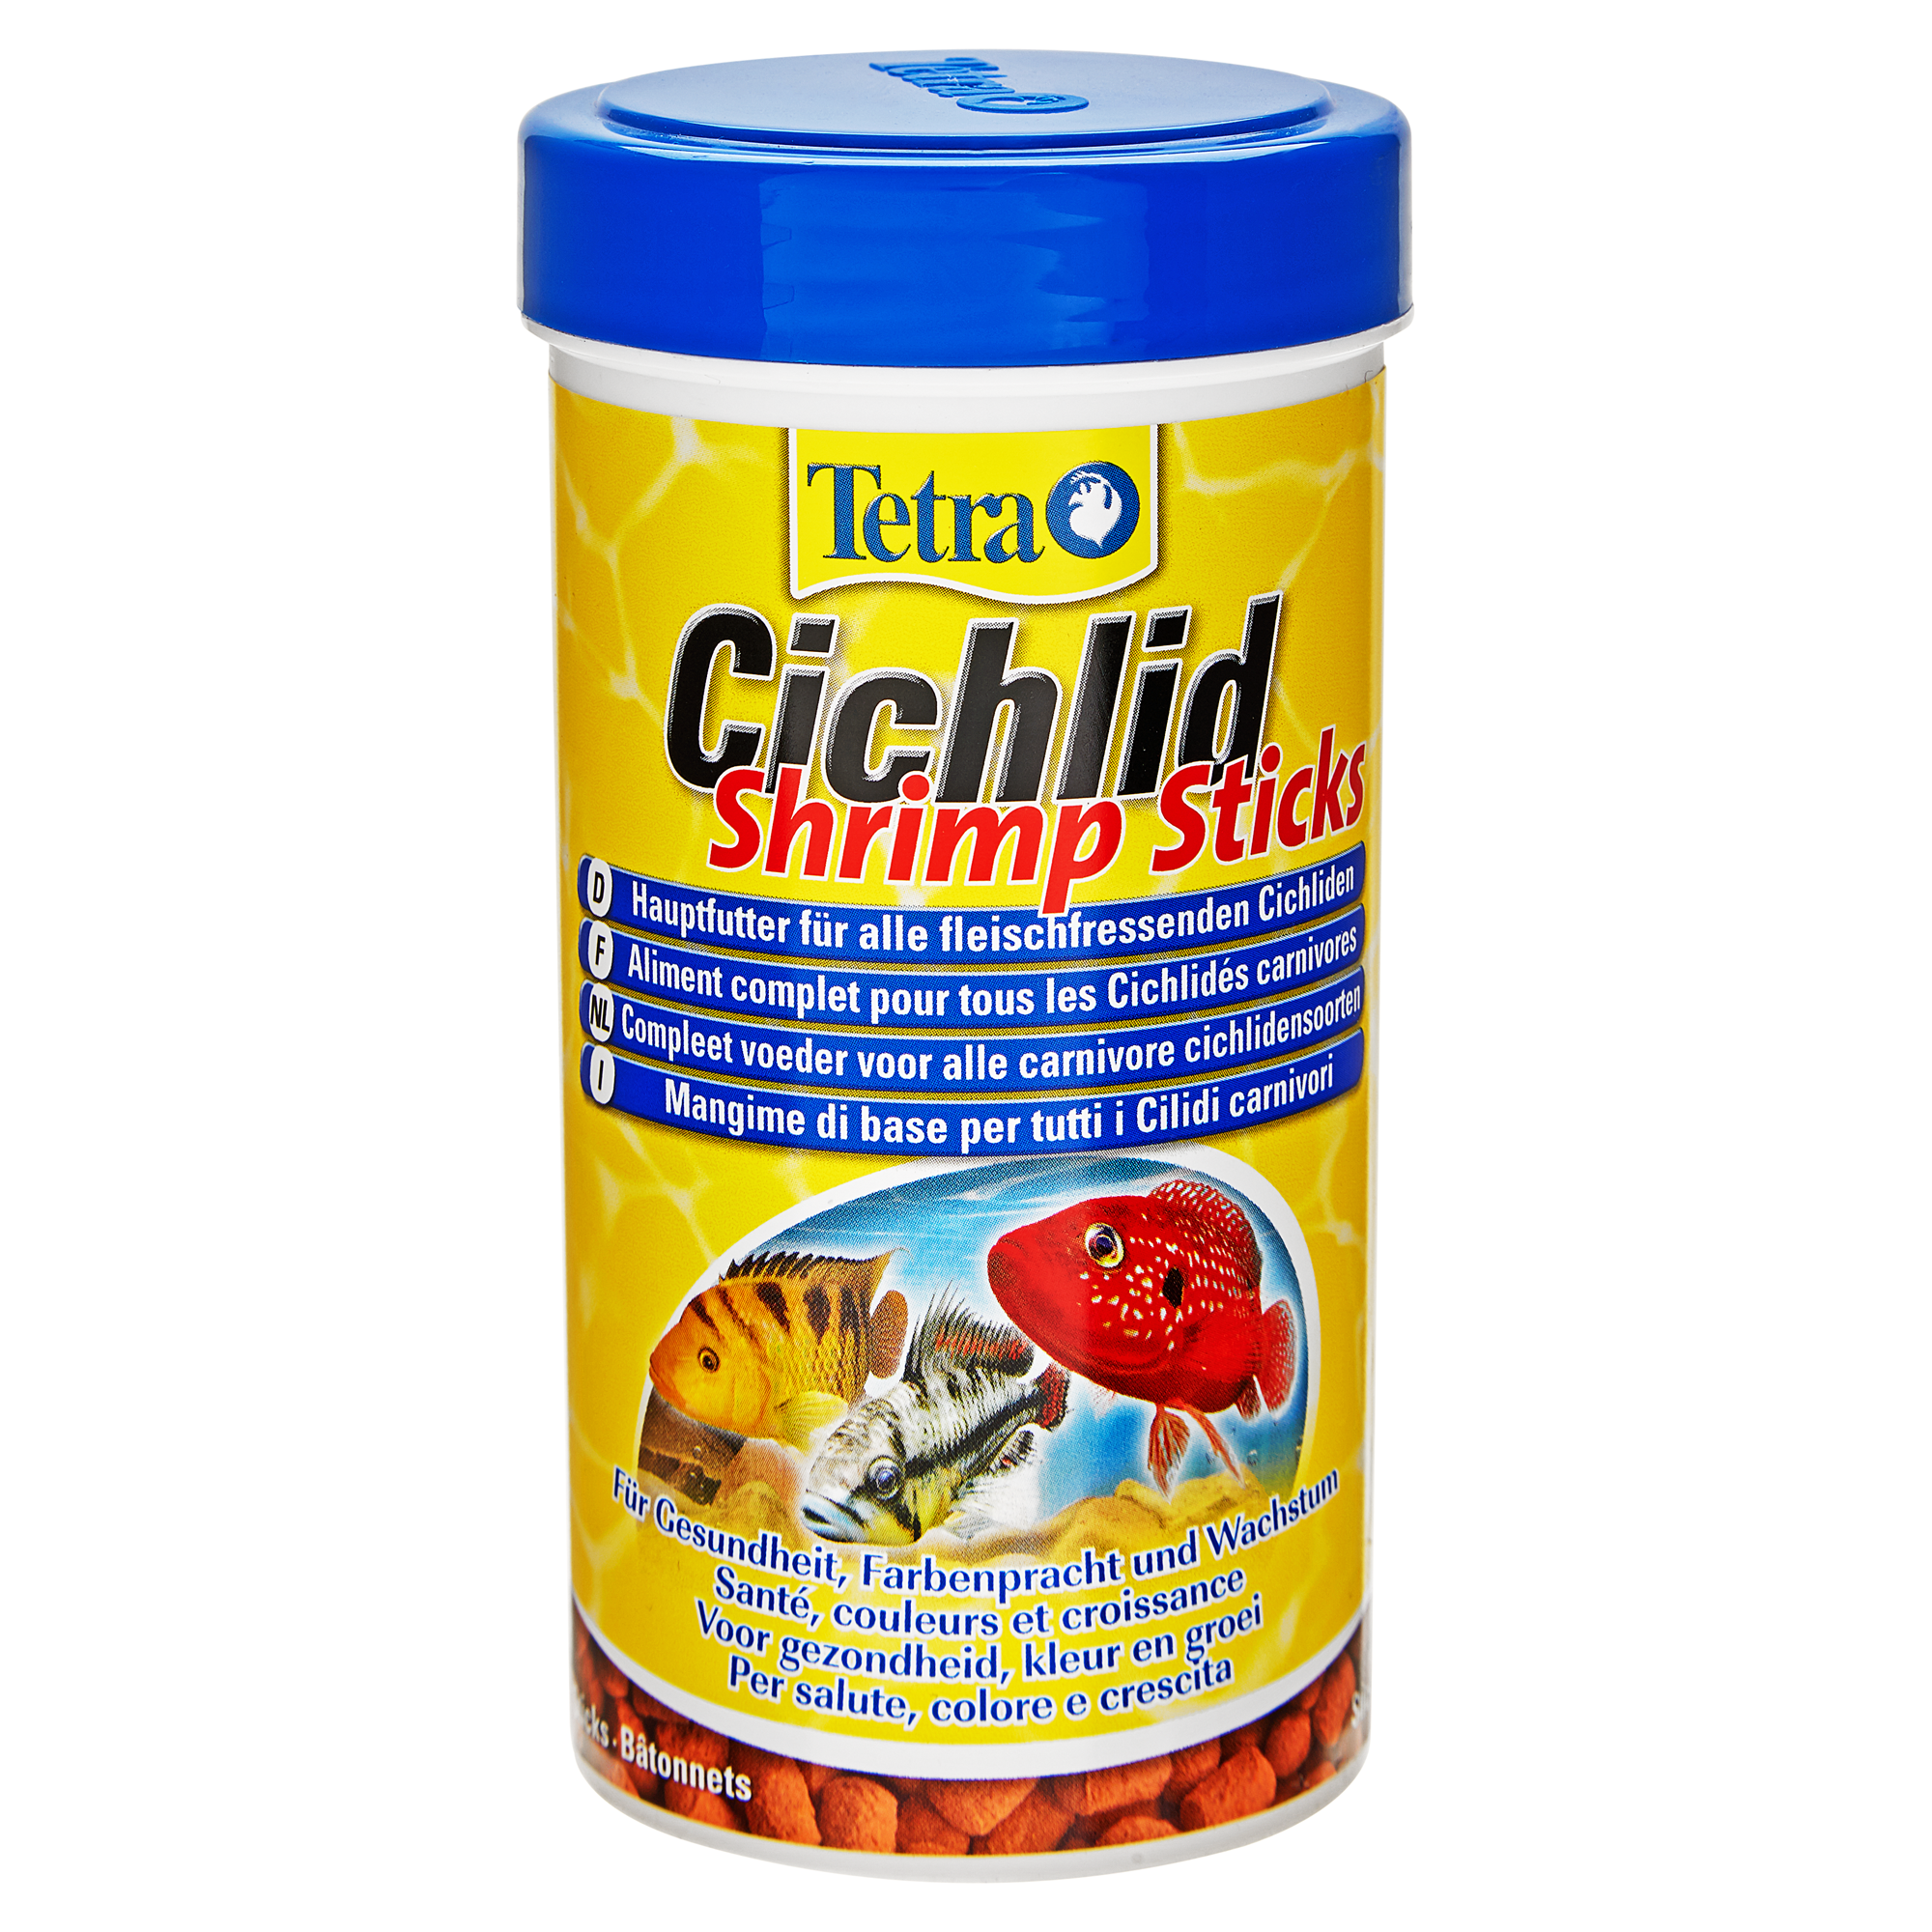 Fischfutter Cichlid Shrimp Sticks 85 g + product picture